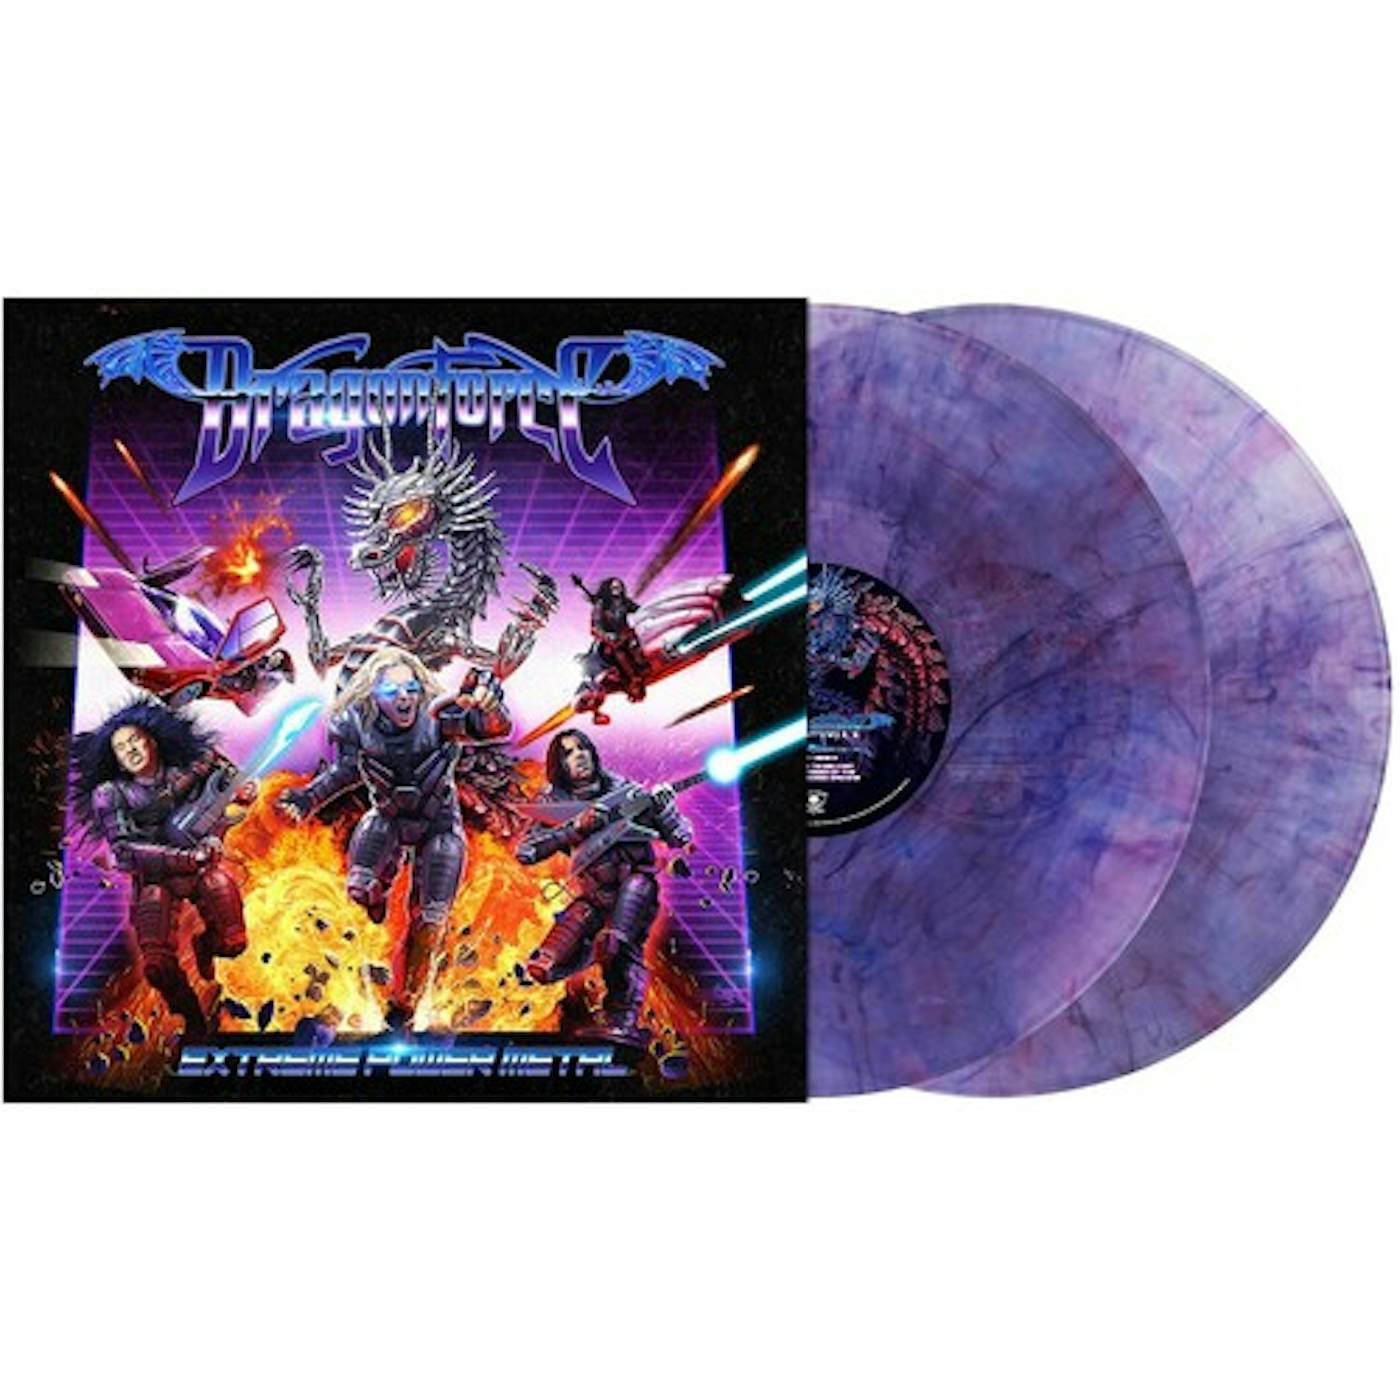 DragonForce Extreme Power Metal Vinyl Record